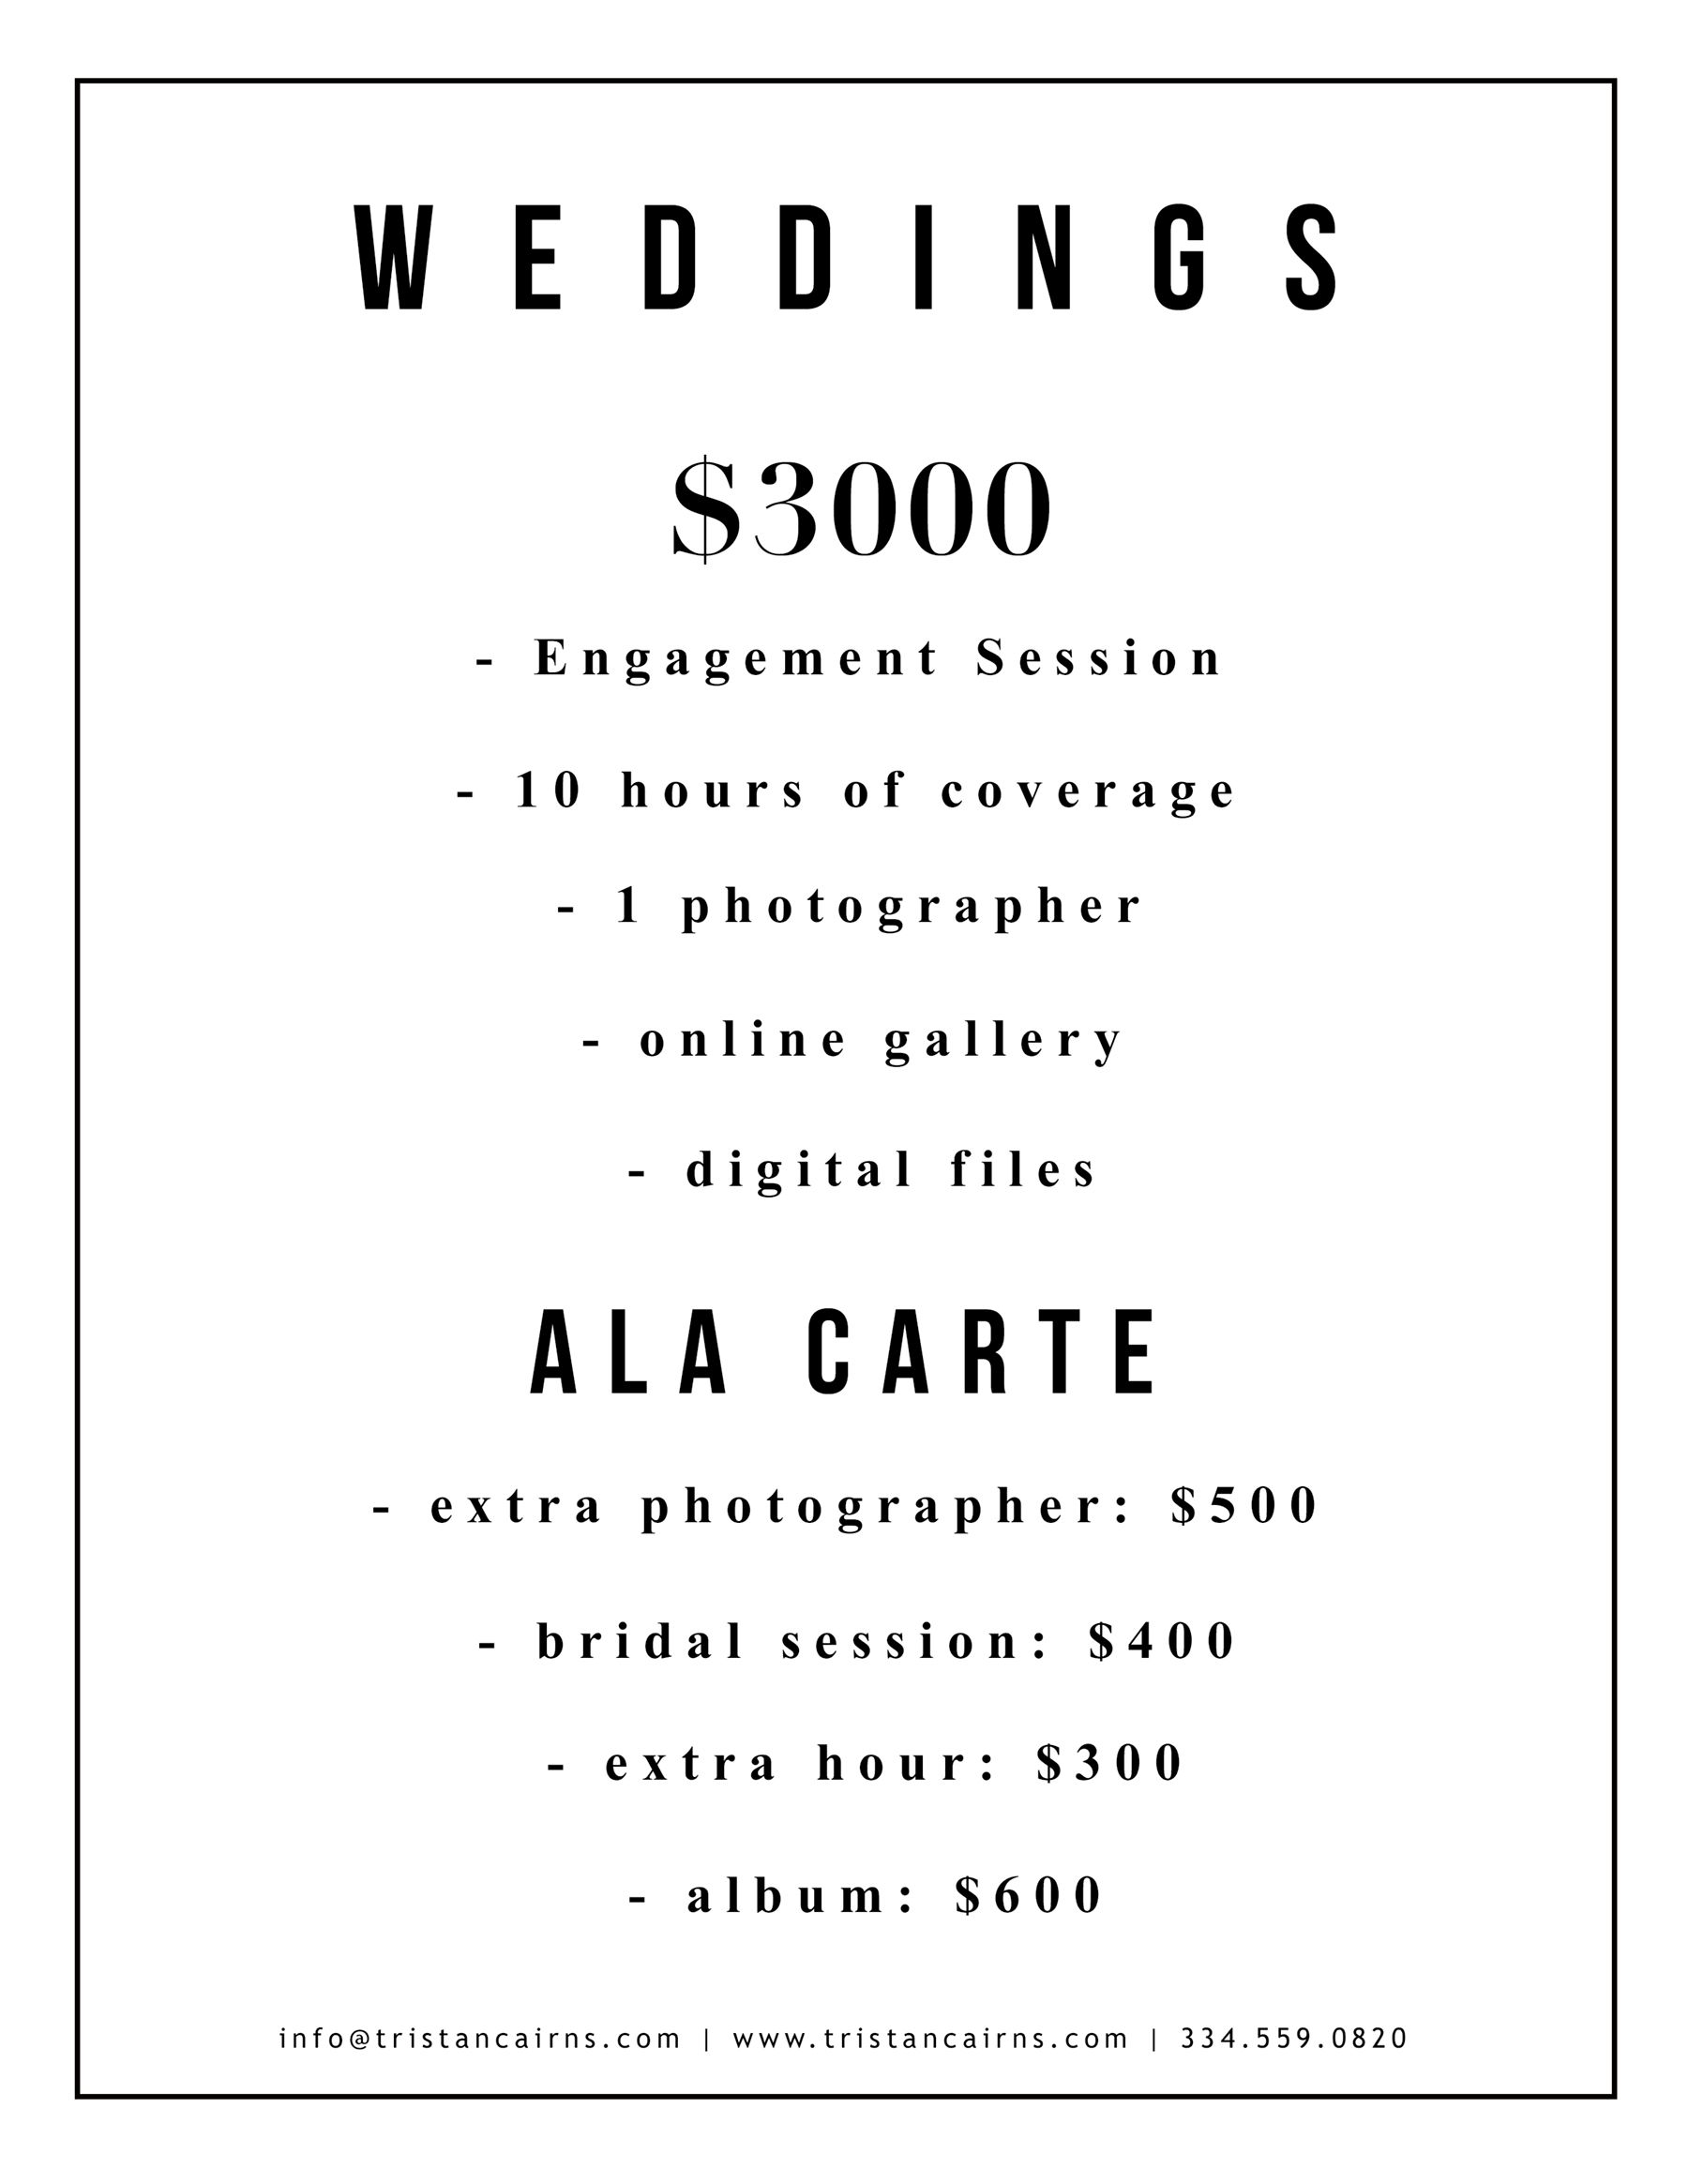 Wedding Prices.jpg